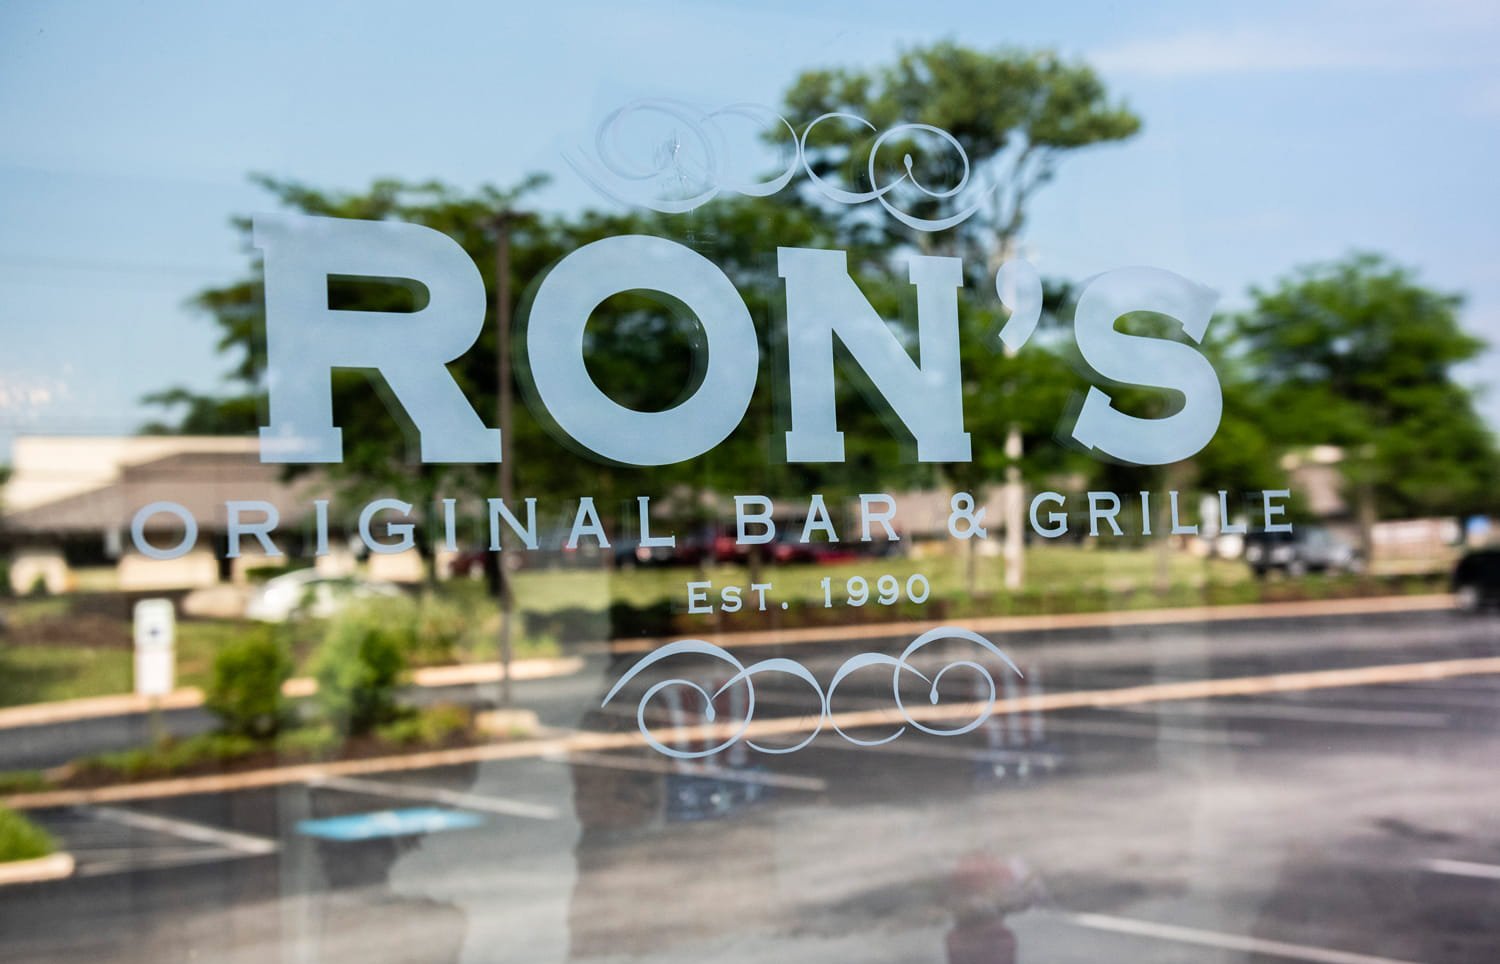 About Ron's Original Bar & Grille